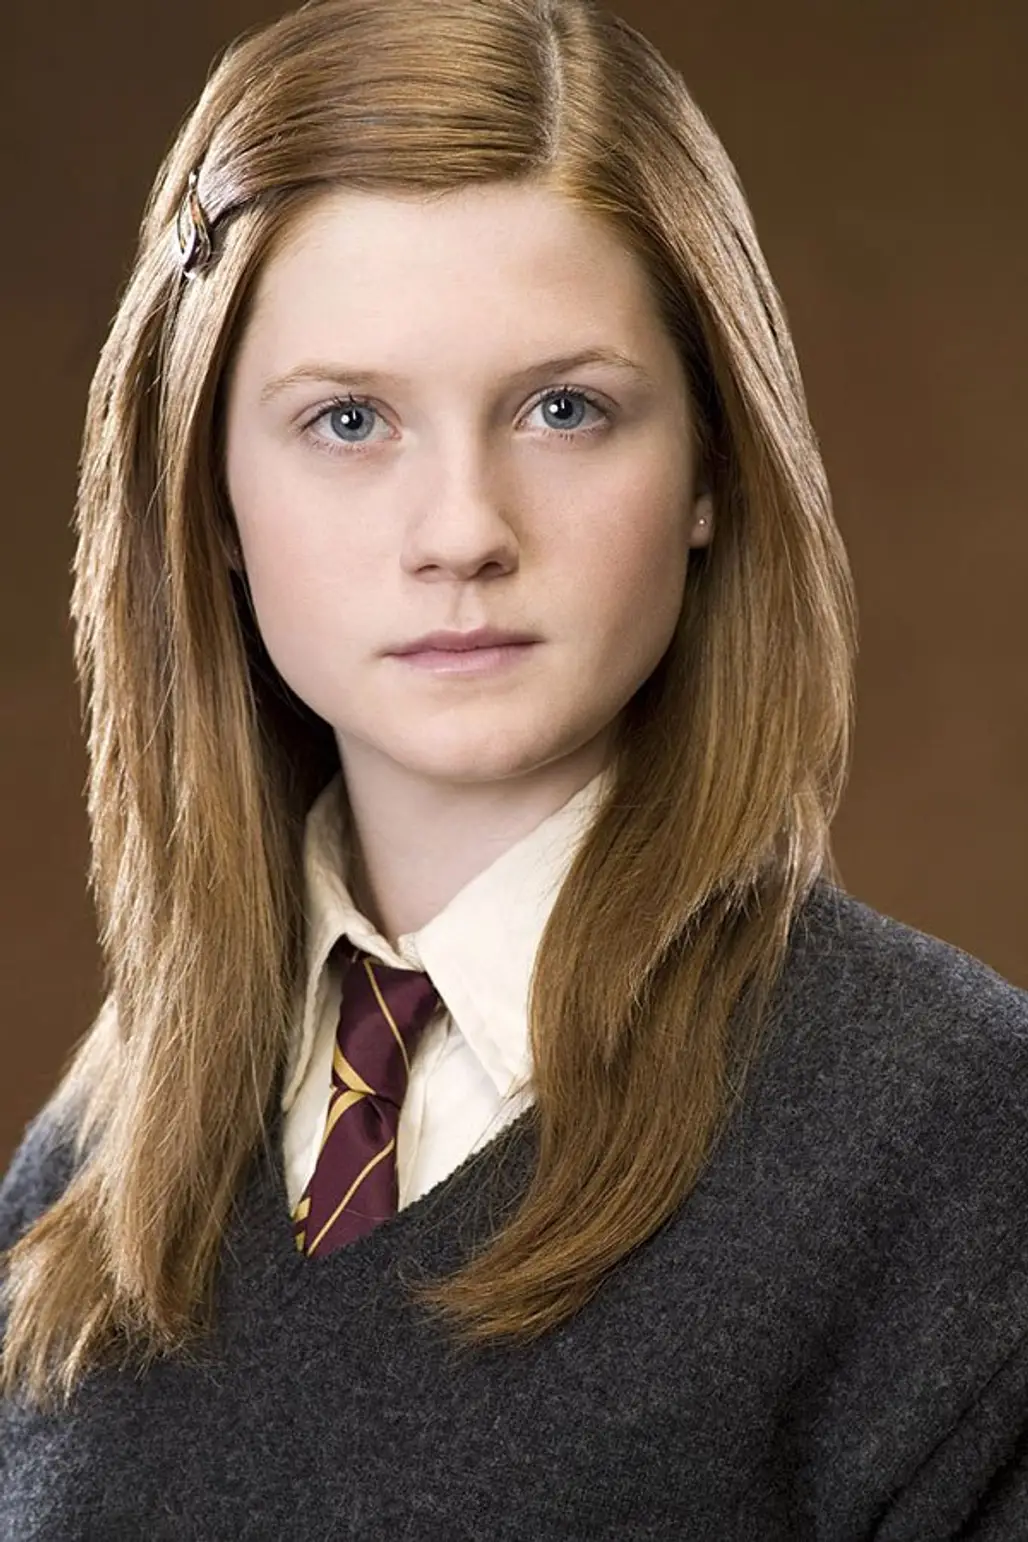 Ginny Weasley then